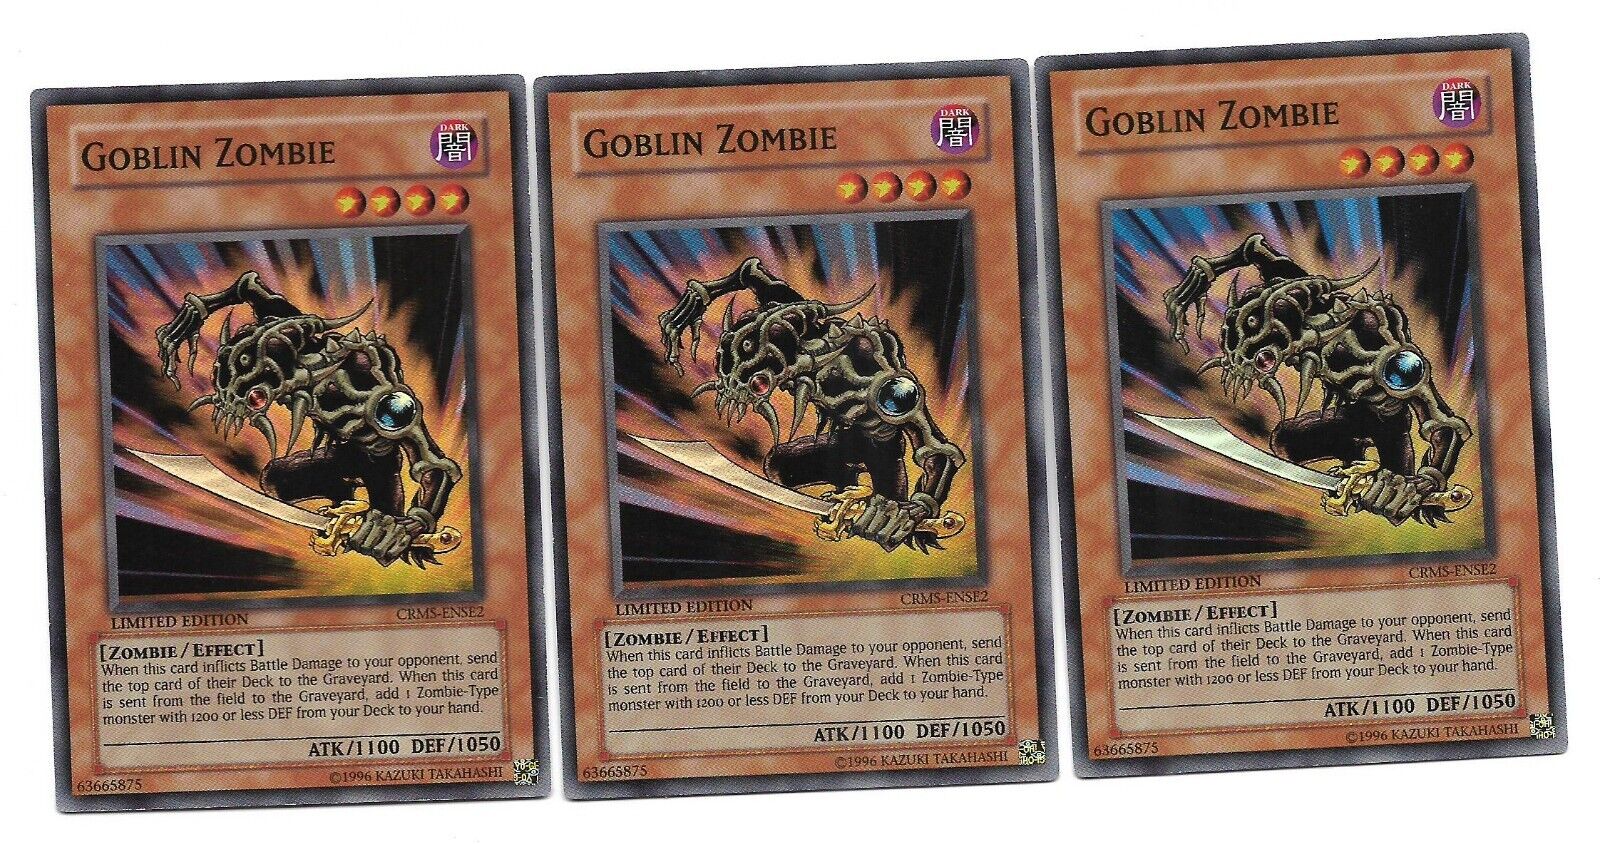 YUGIOH - 3x Goblin Zombie - (Super Rare - Limited Edition - CRMS-ENSE2) - MP